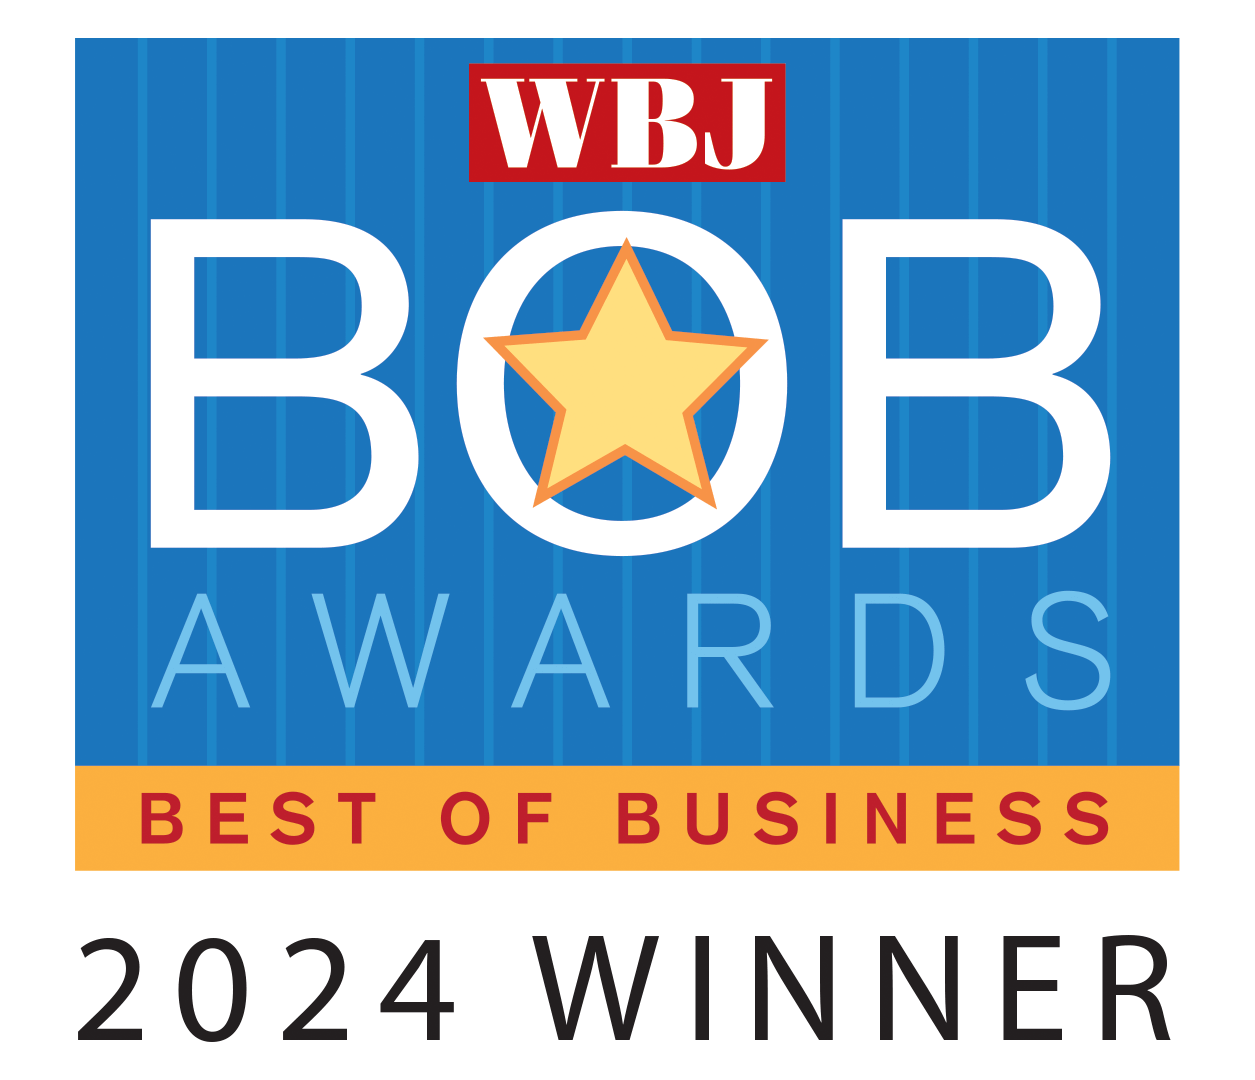 WBJ Best of Business award 2024